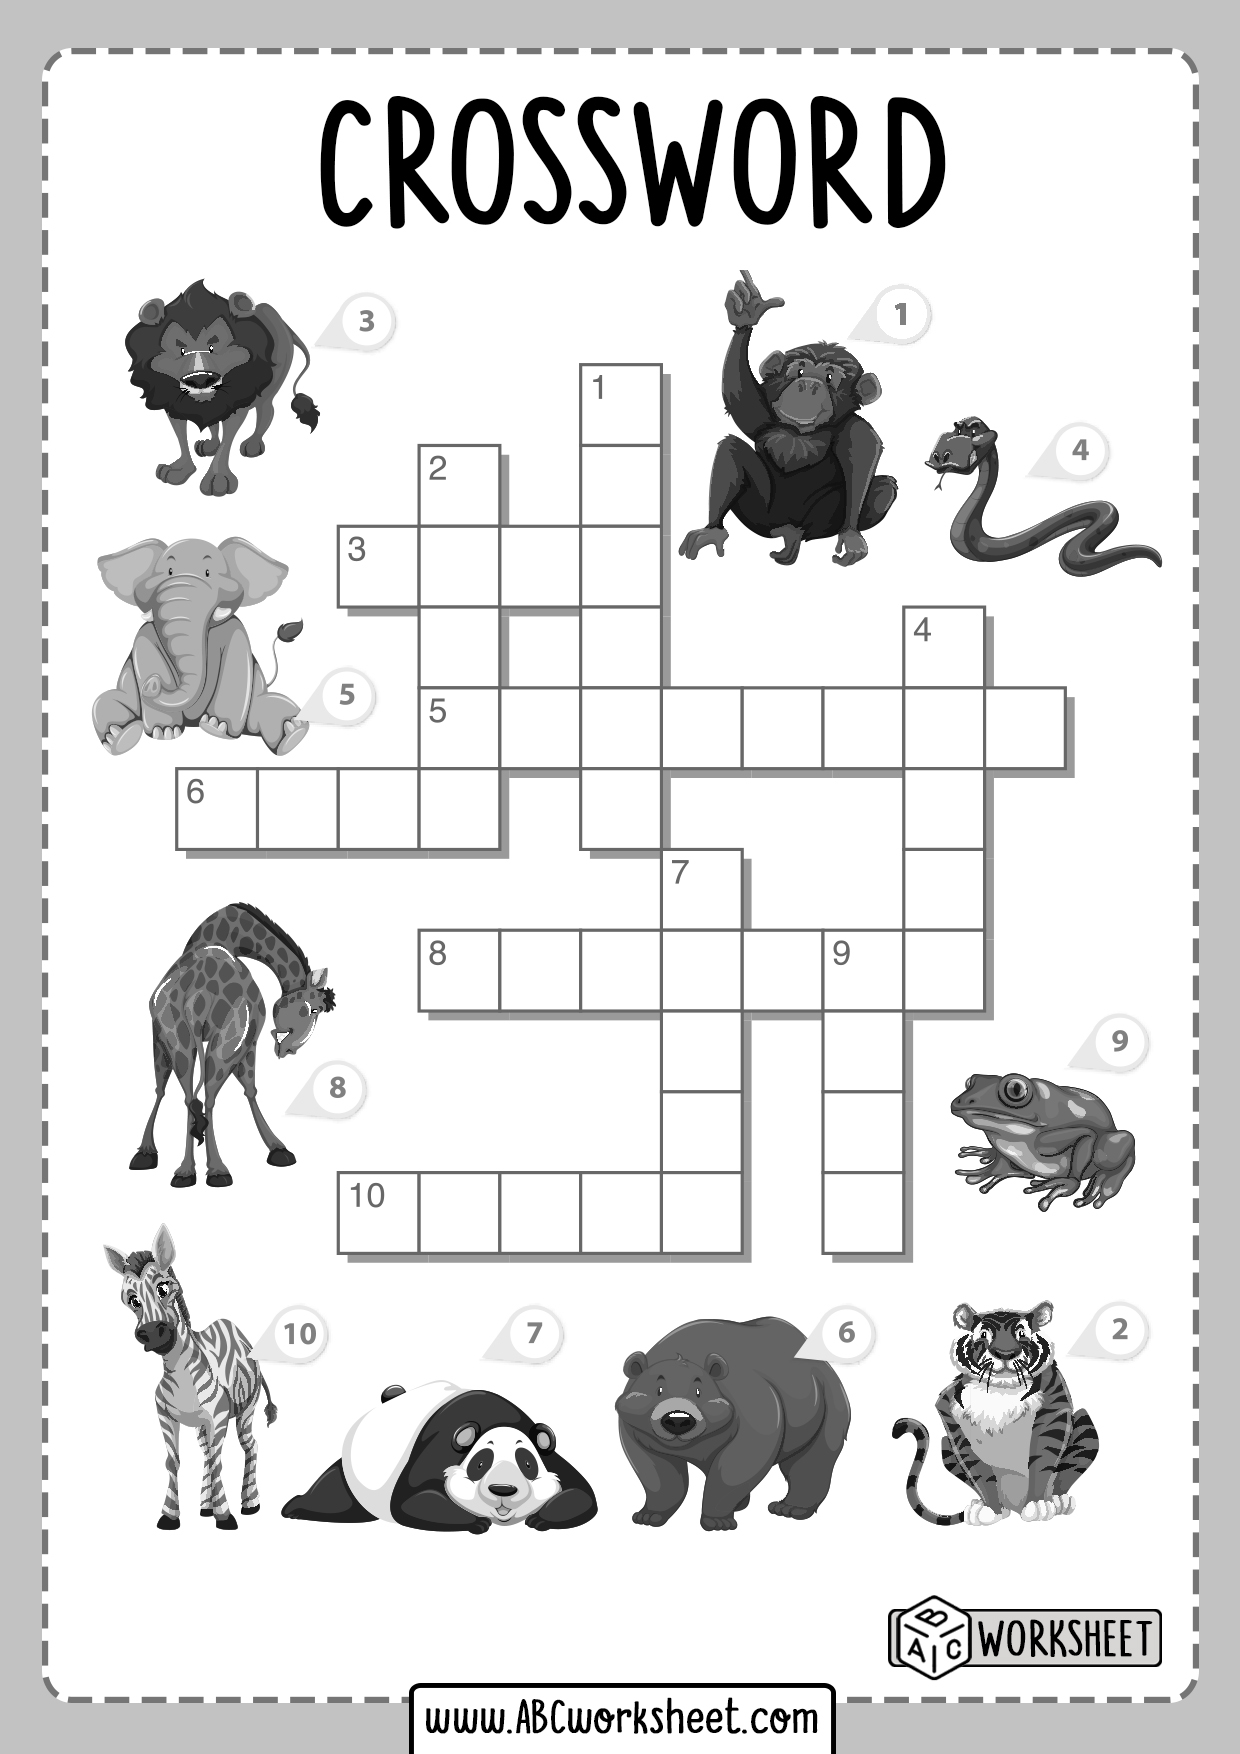 crosswords worksheets for kids